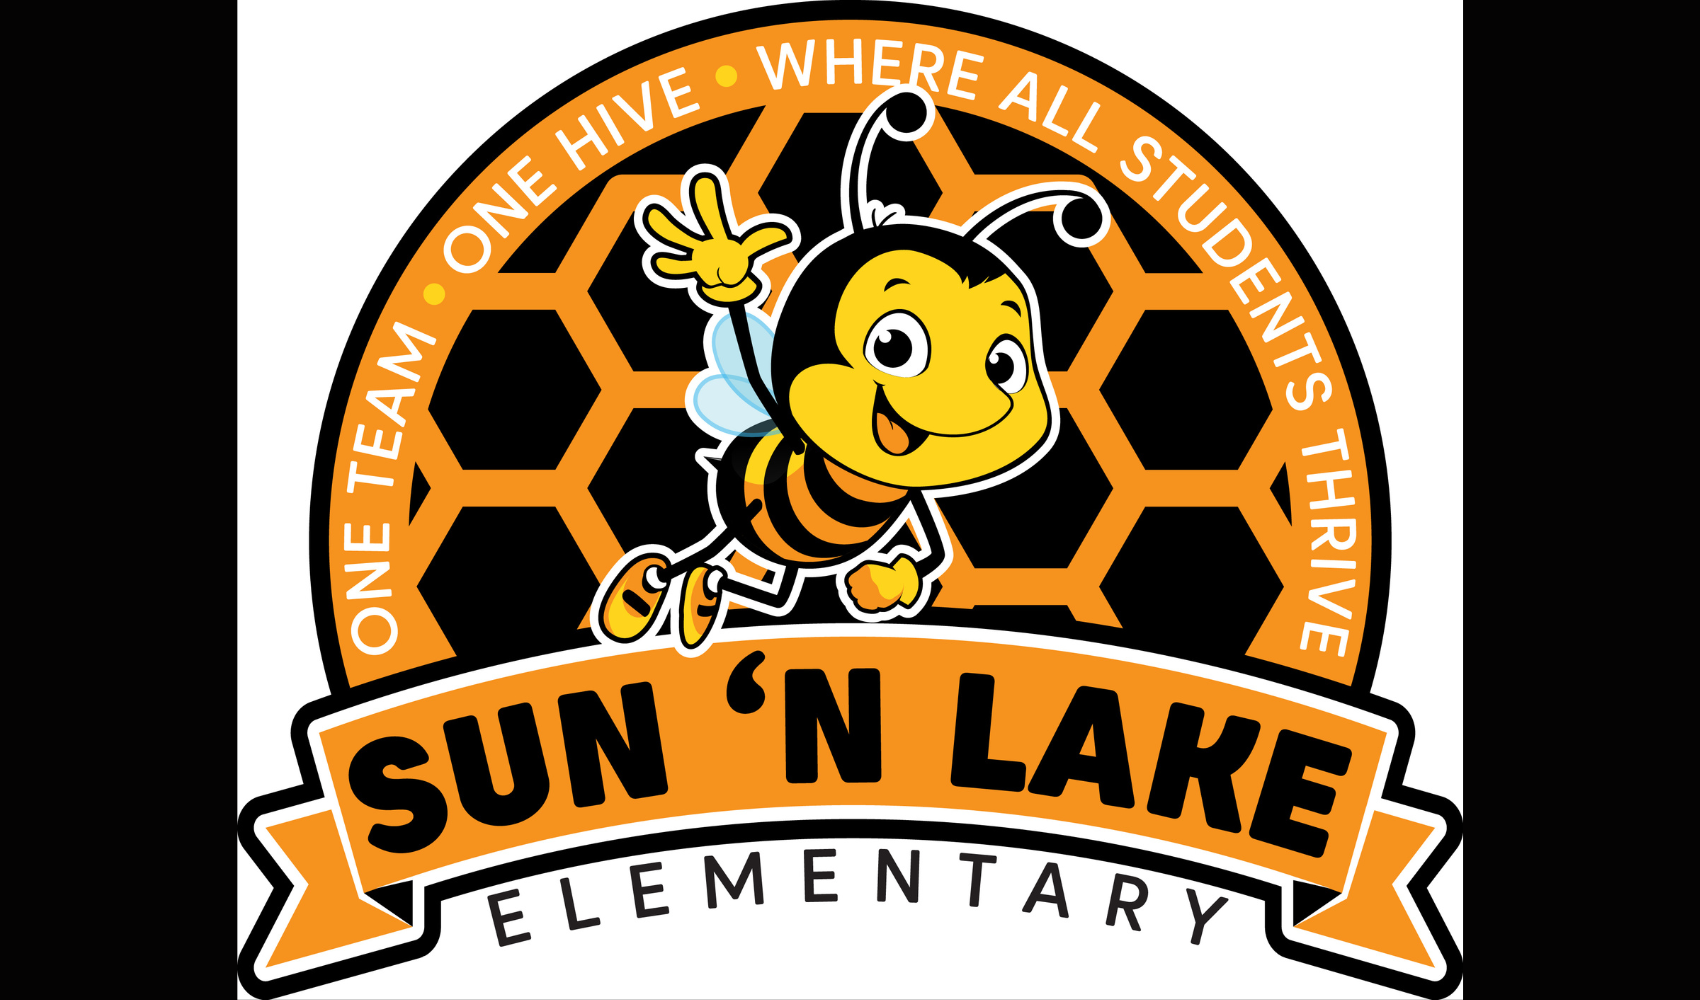 Sun n lake elementary